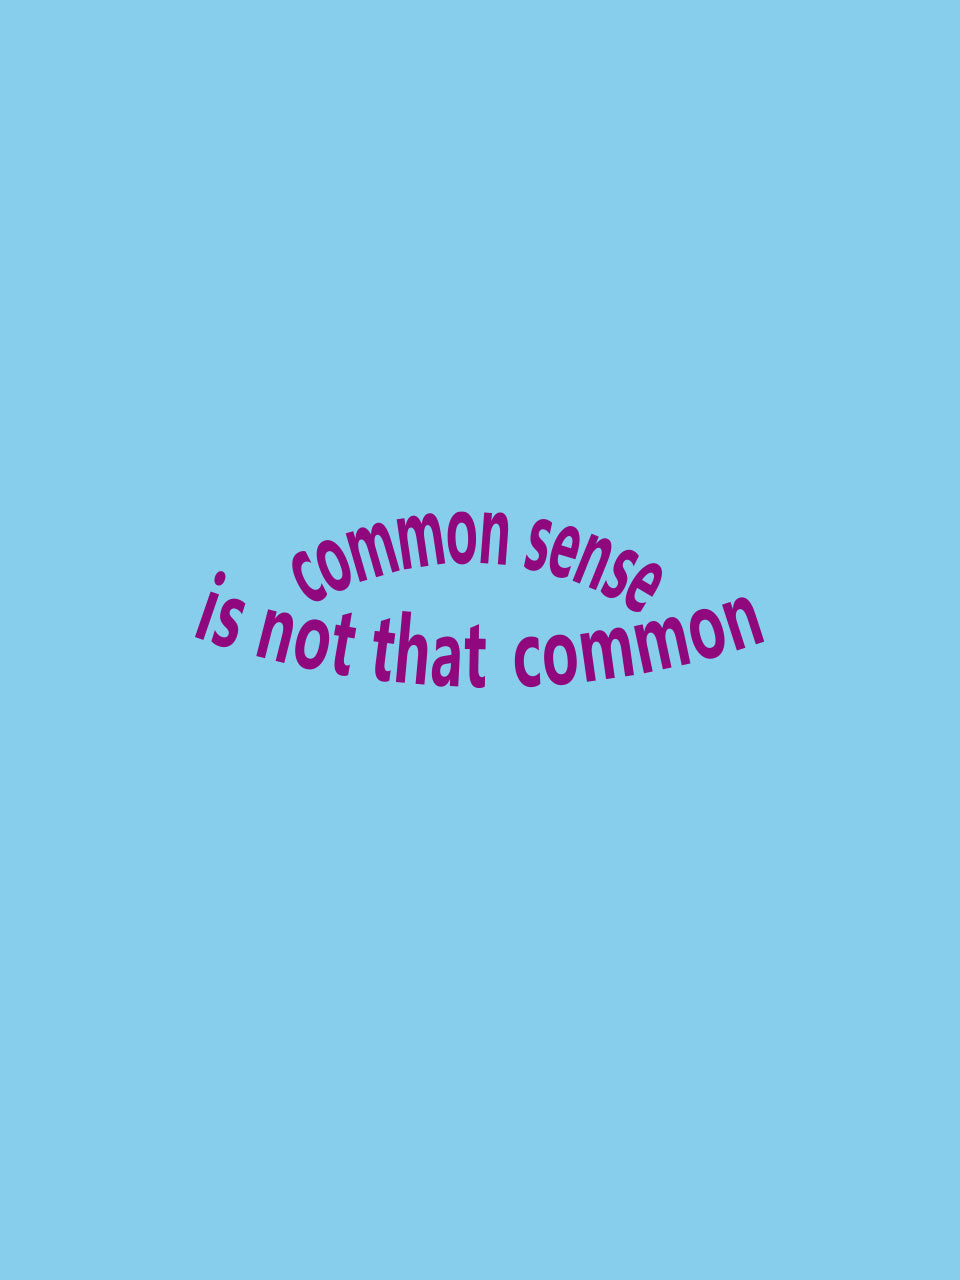 Common sense is not that common